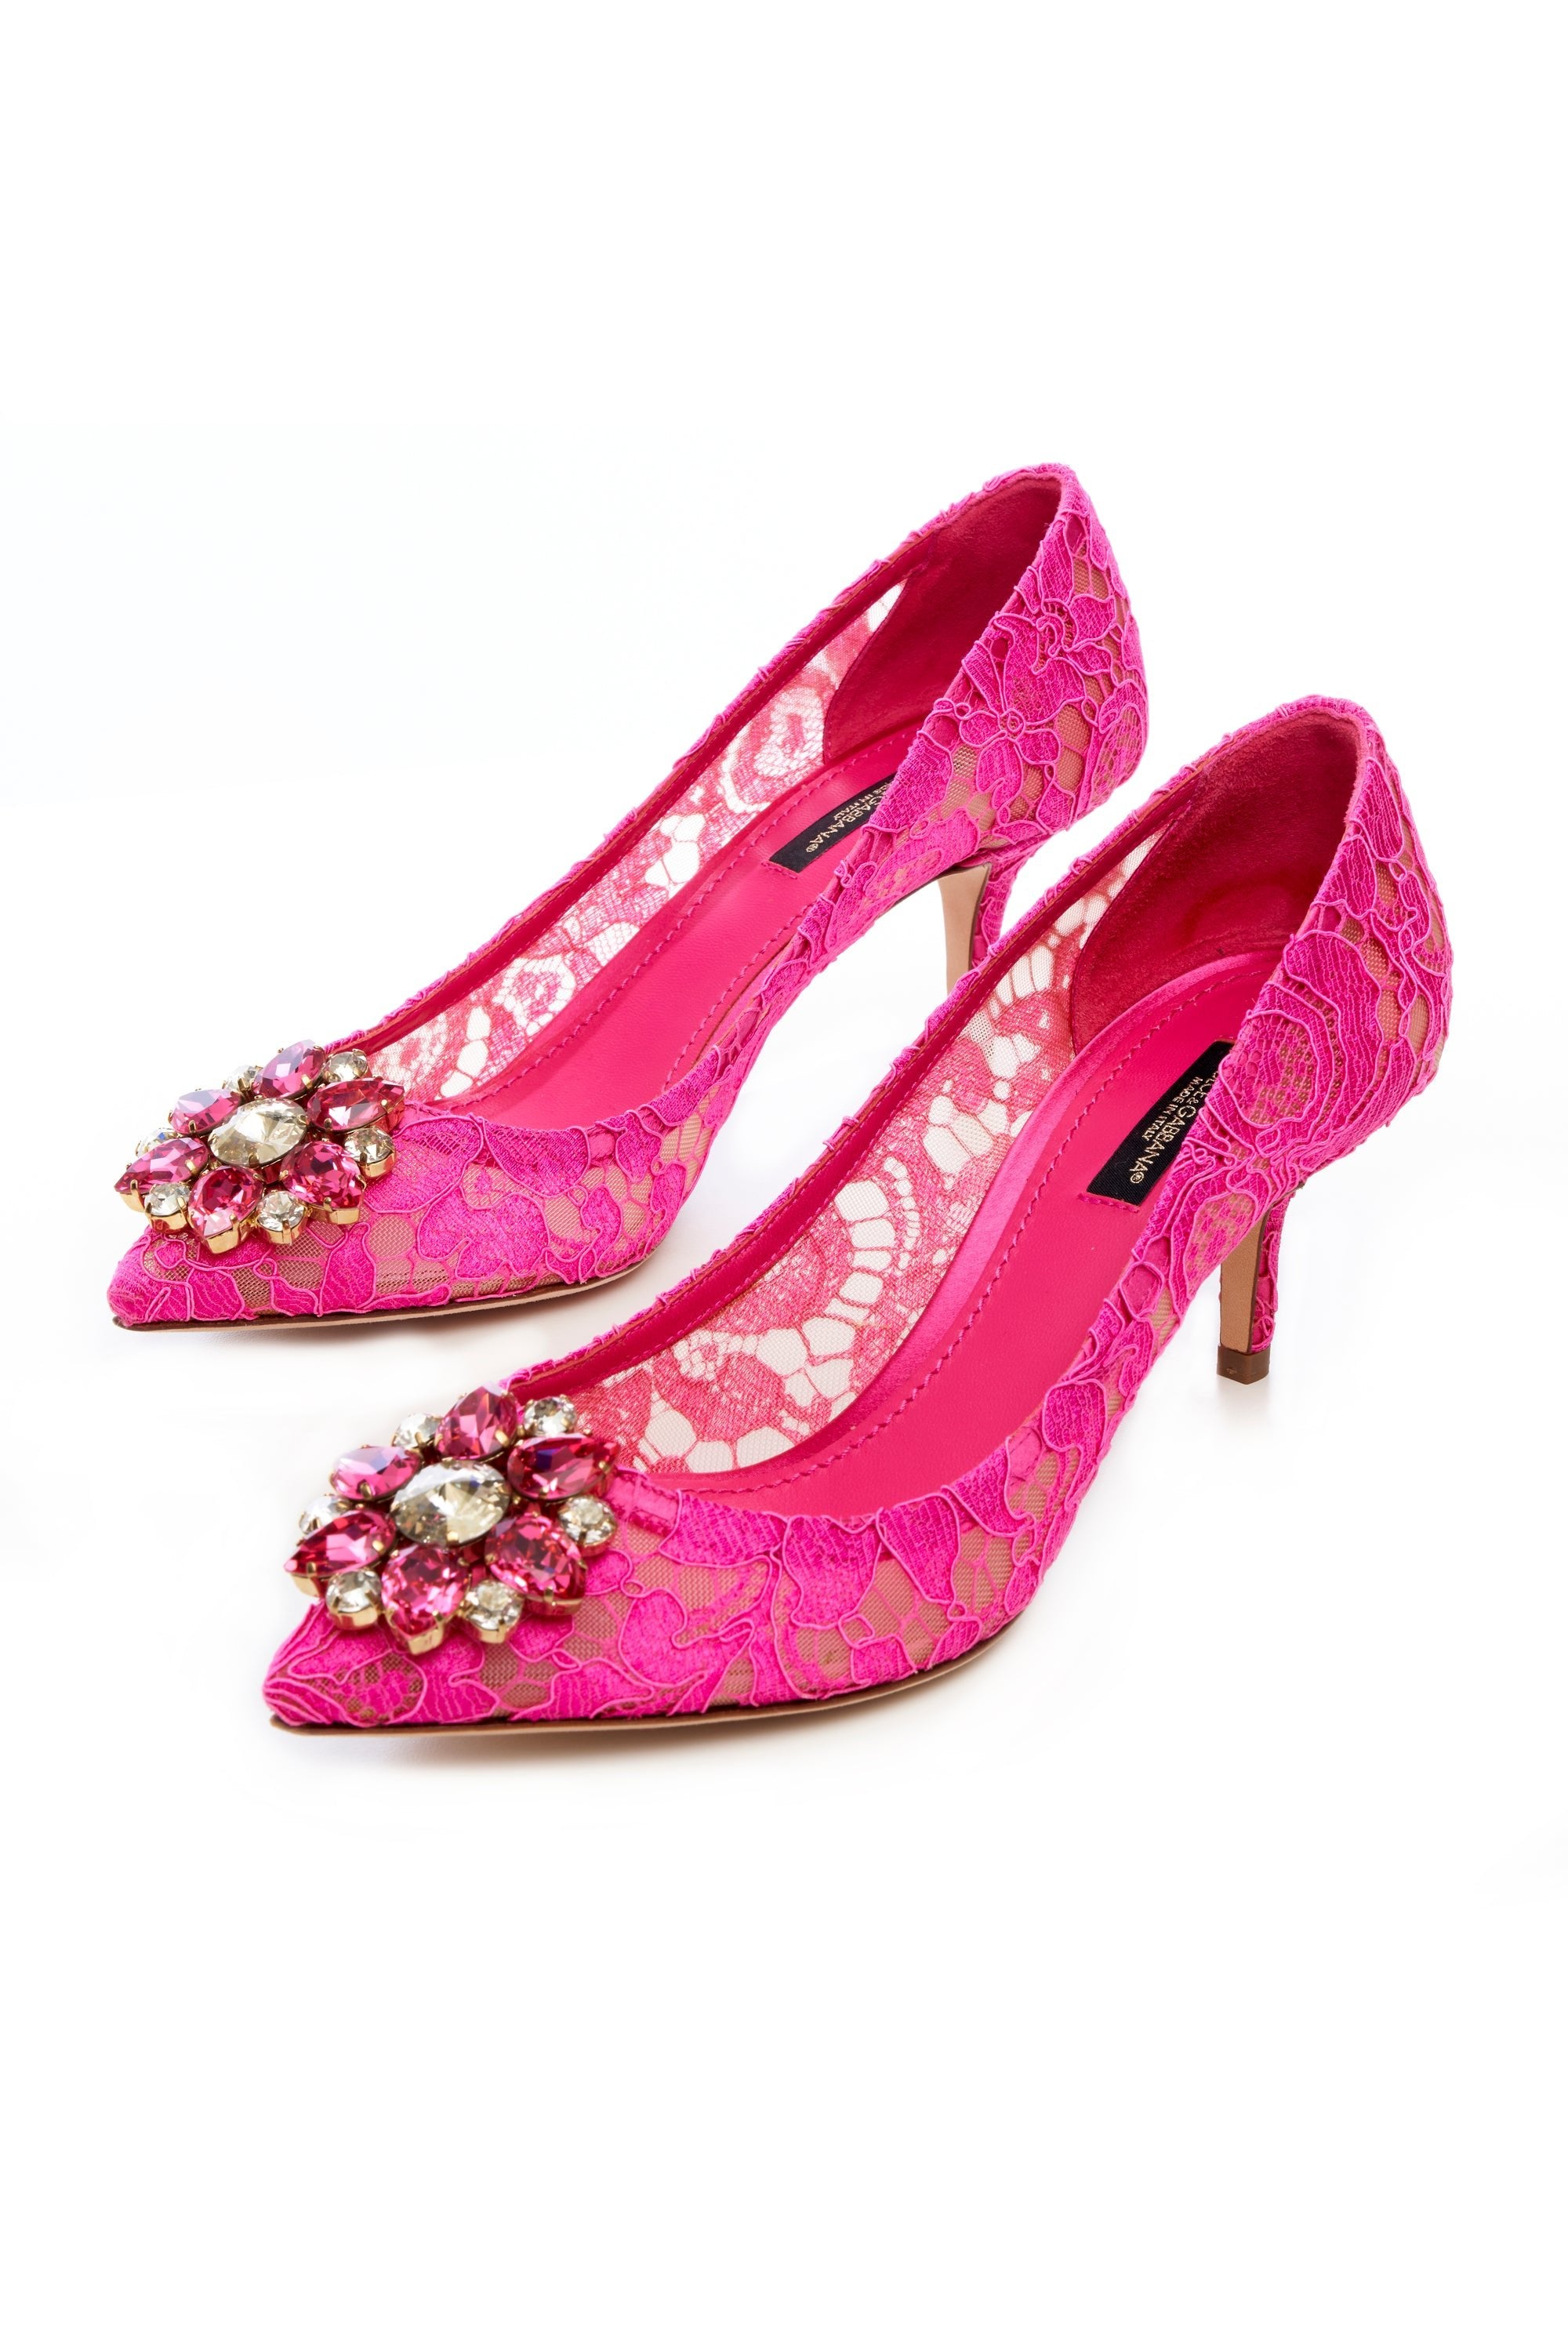 Dolce & Gabbana Pink Lace Pumps 38.5